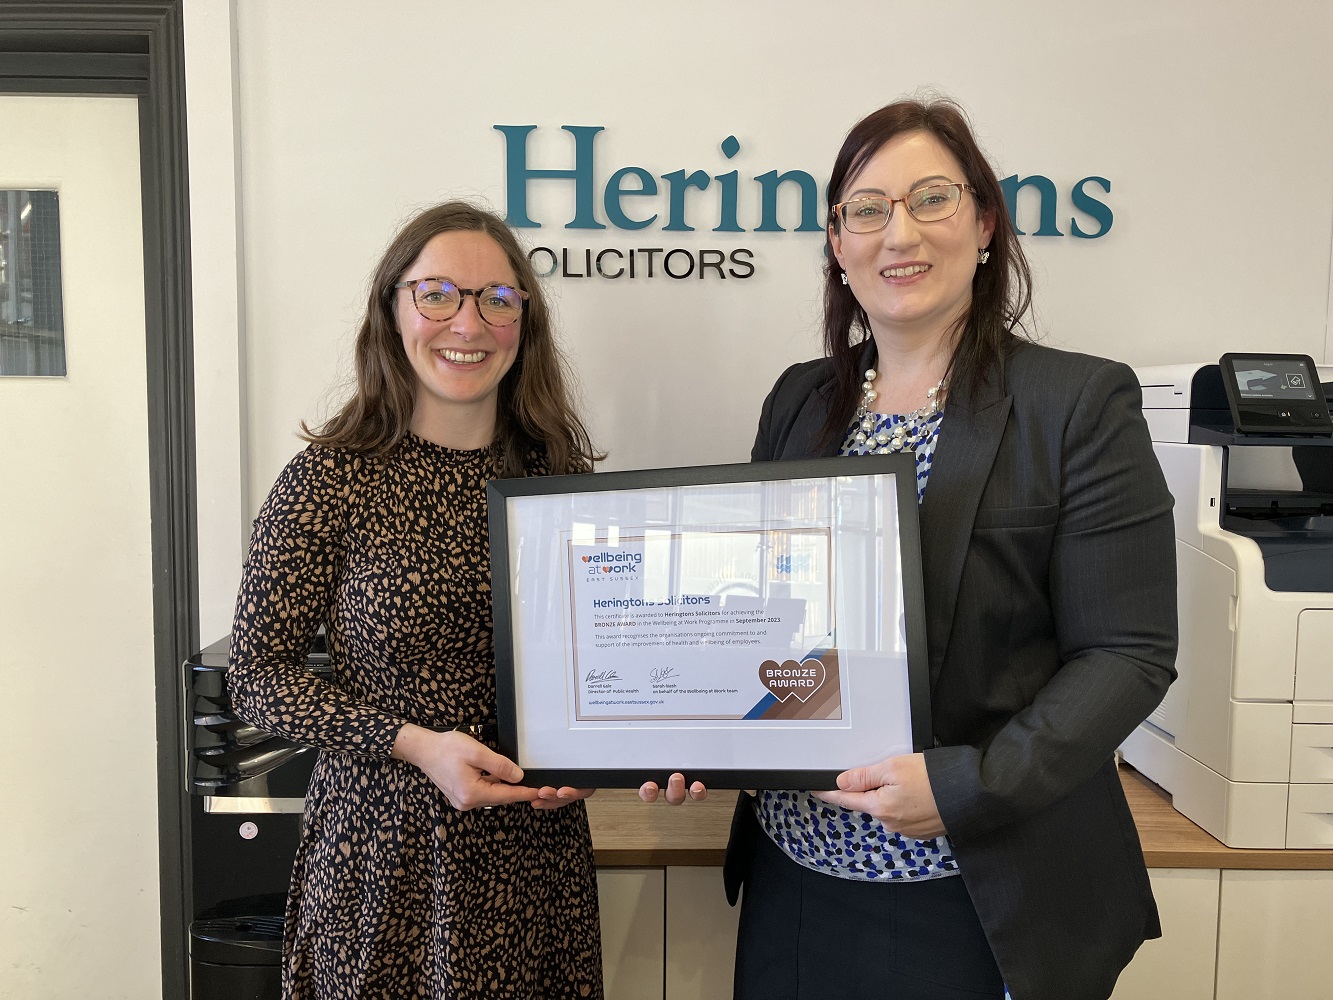 ESCC staff handing over framed certificate of wellbeing award to Heringtons' employee